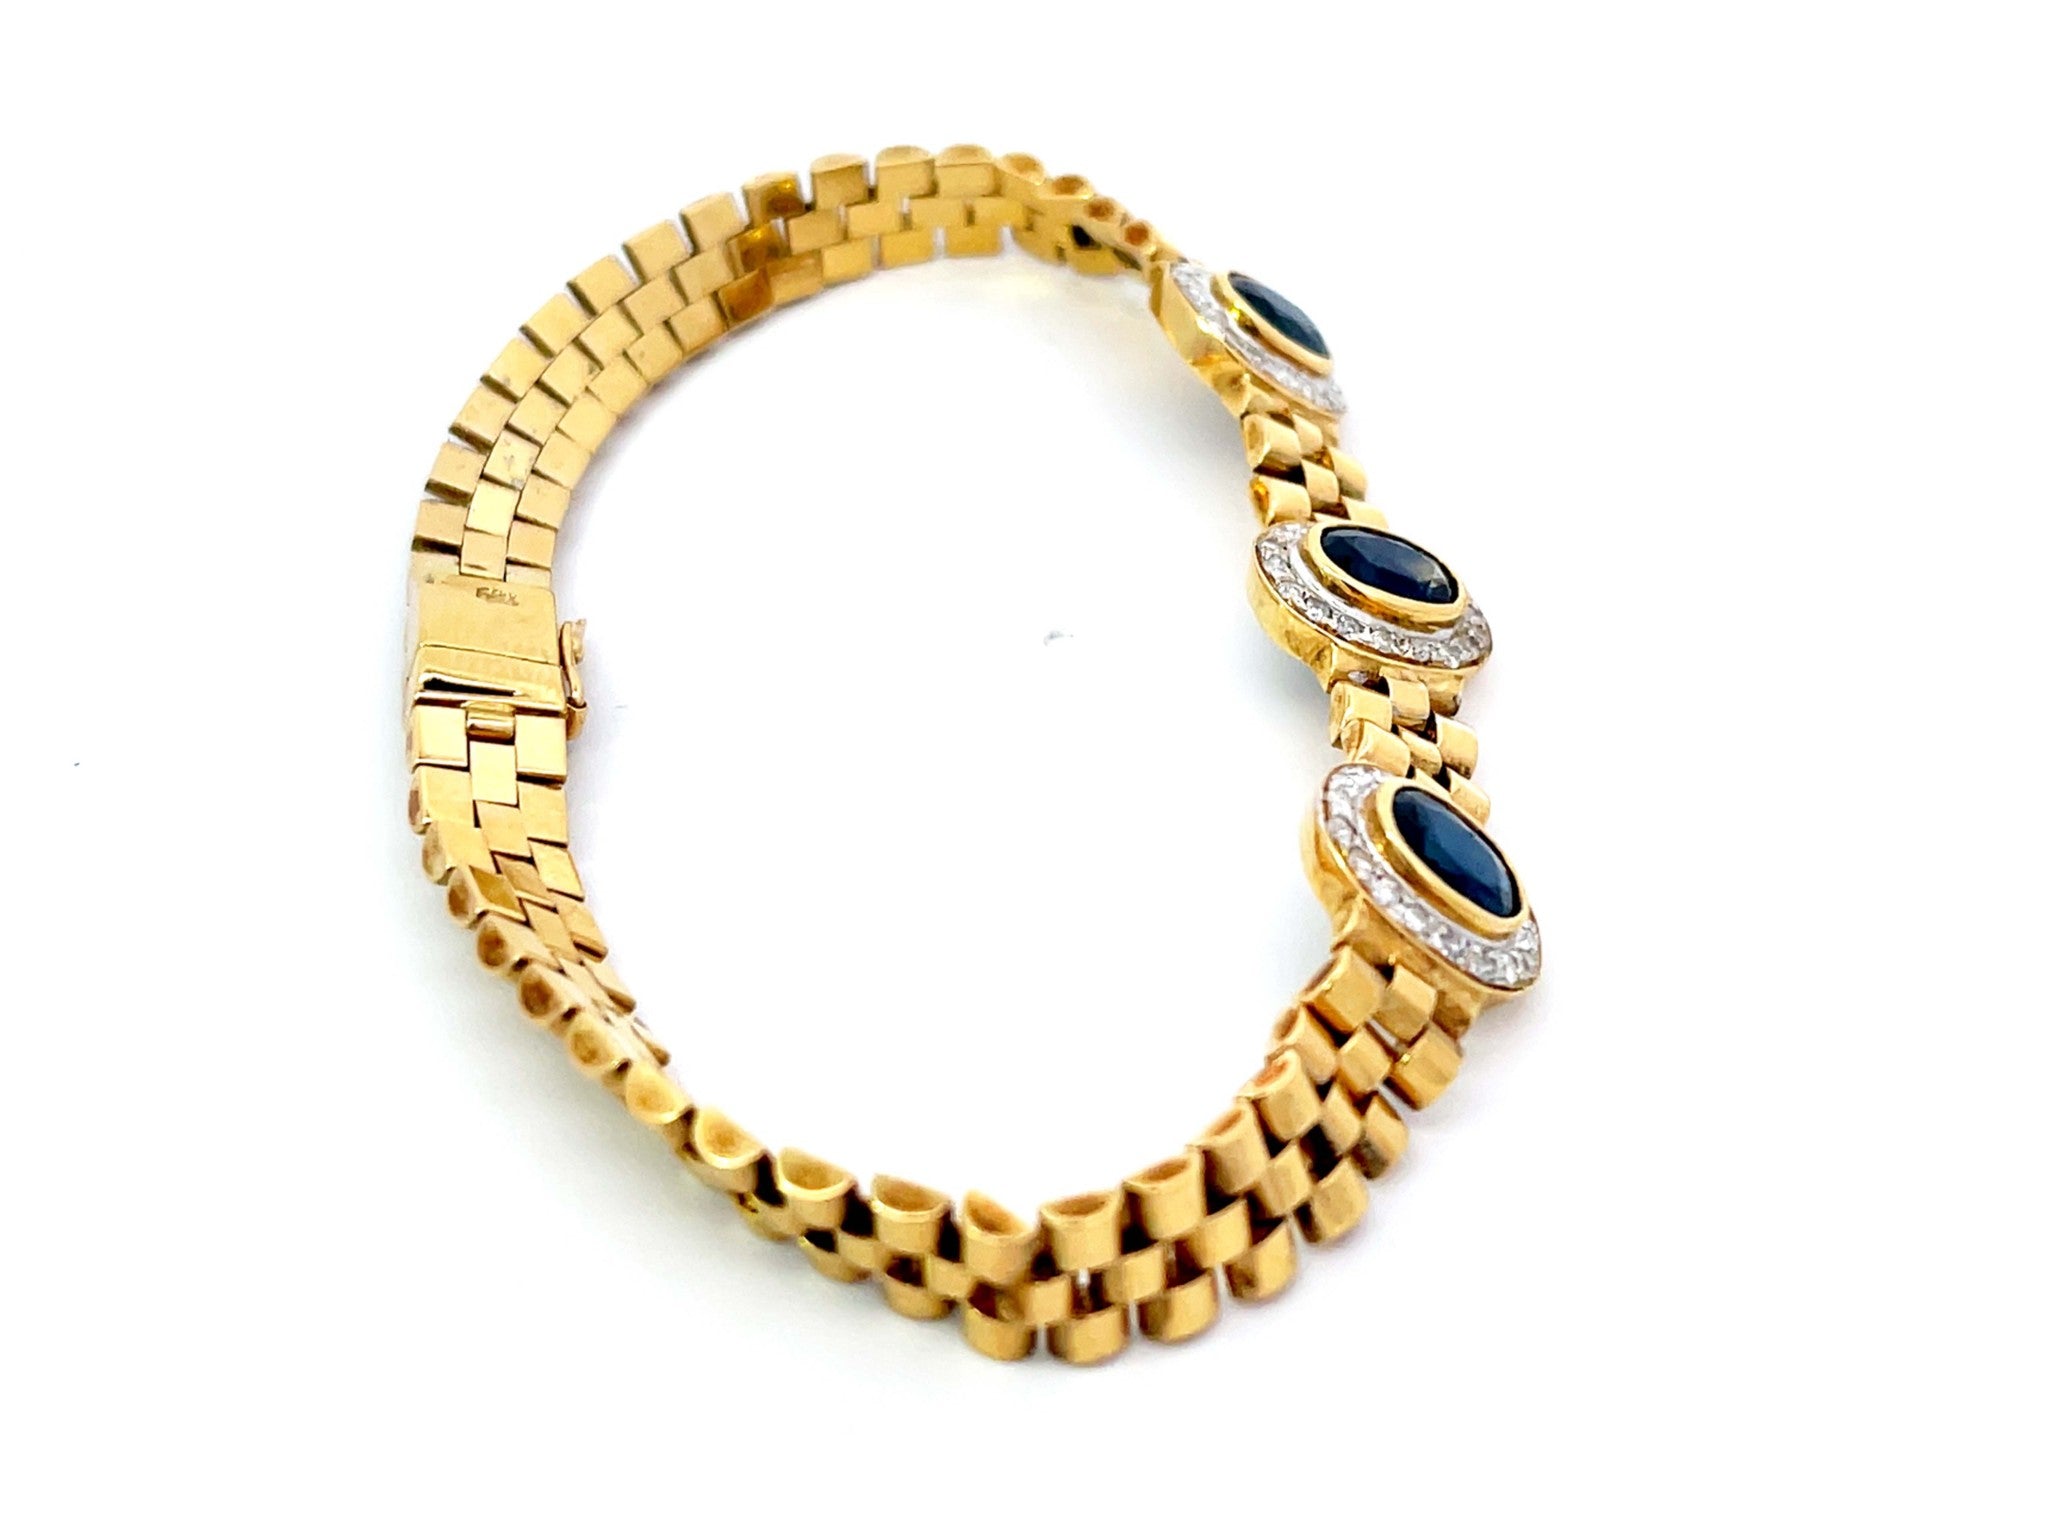 Three Sapphire Diamond Halo Link Bracelet in 18k Yellow Gold